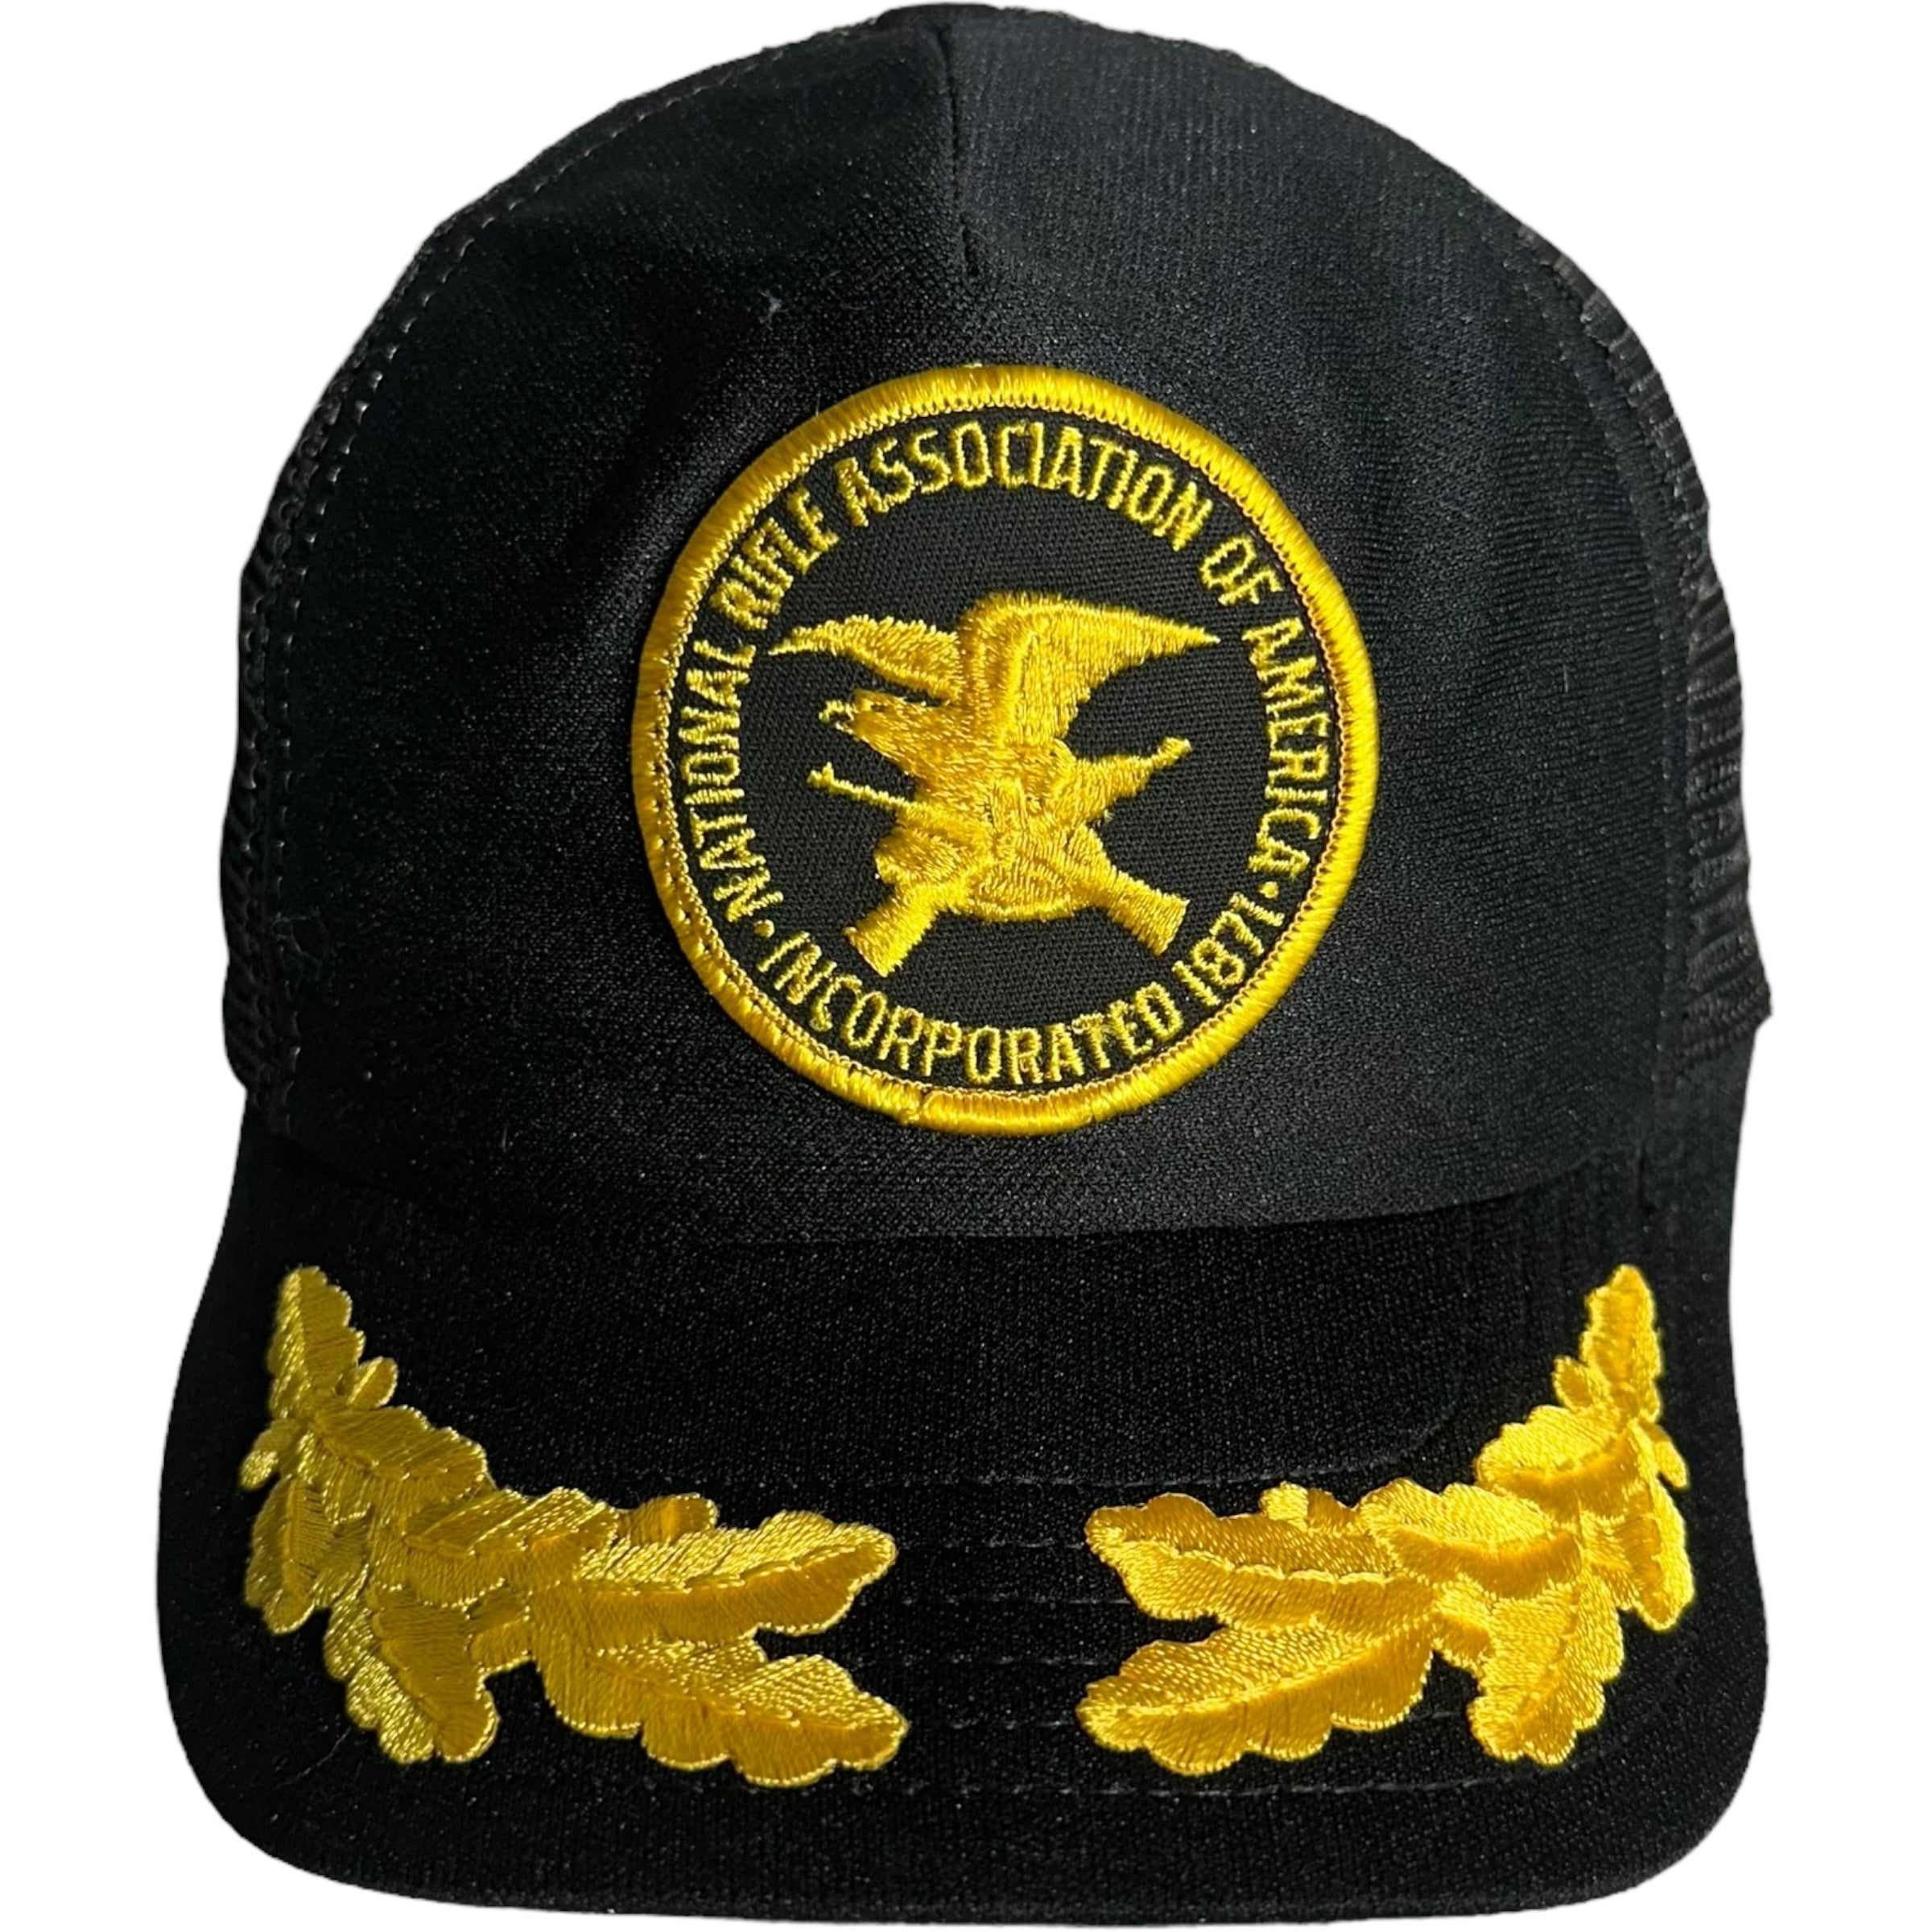 Vintage NRA Snapback Hat